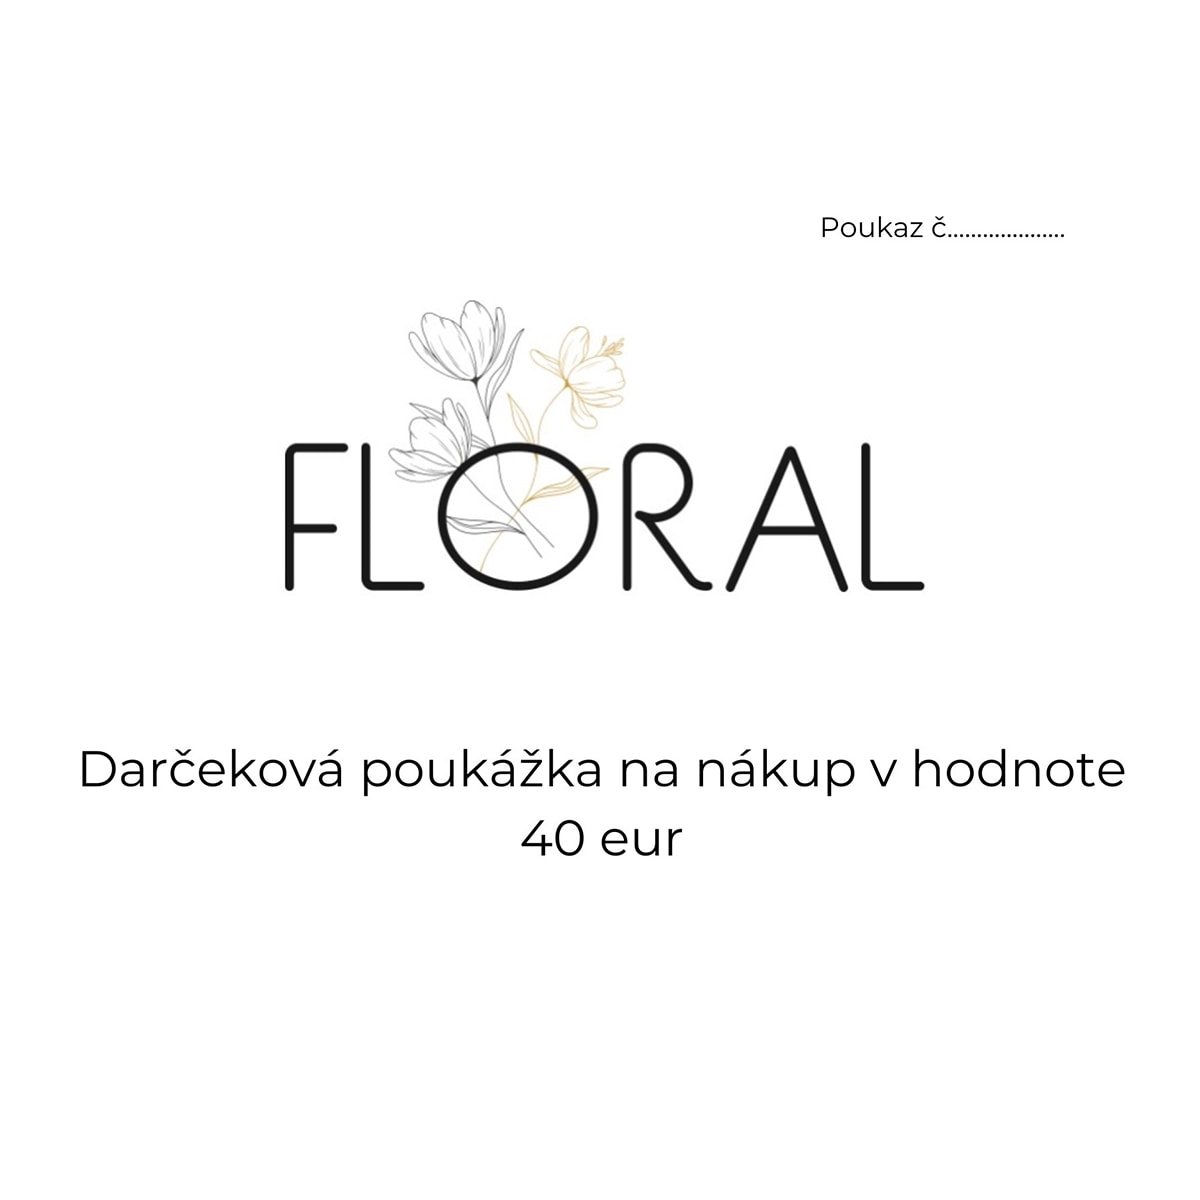 Darcekova-poukazka-na-nakup-kvetov-kytic-obrazov-dekoracii-v-hodnote-40eur